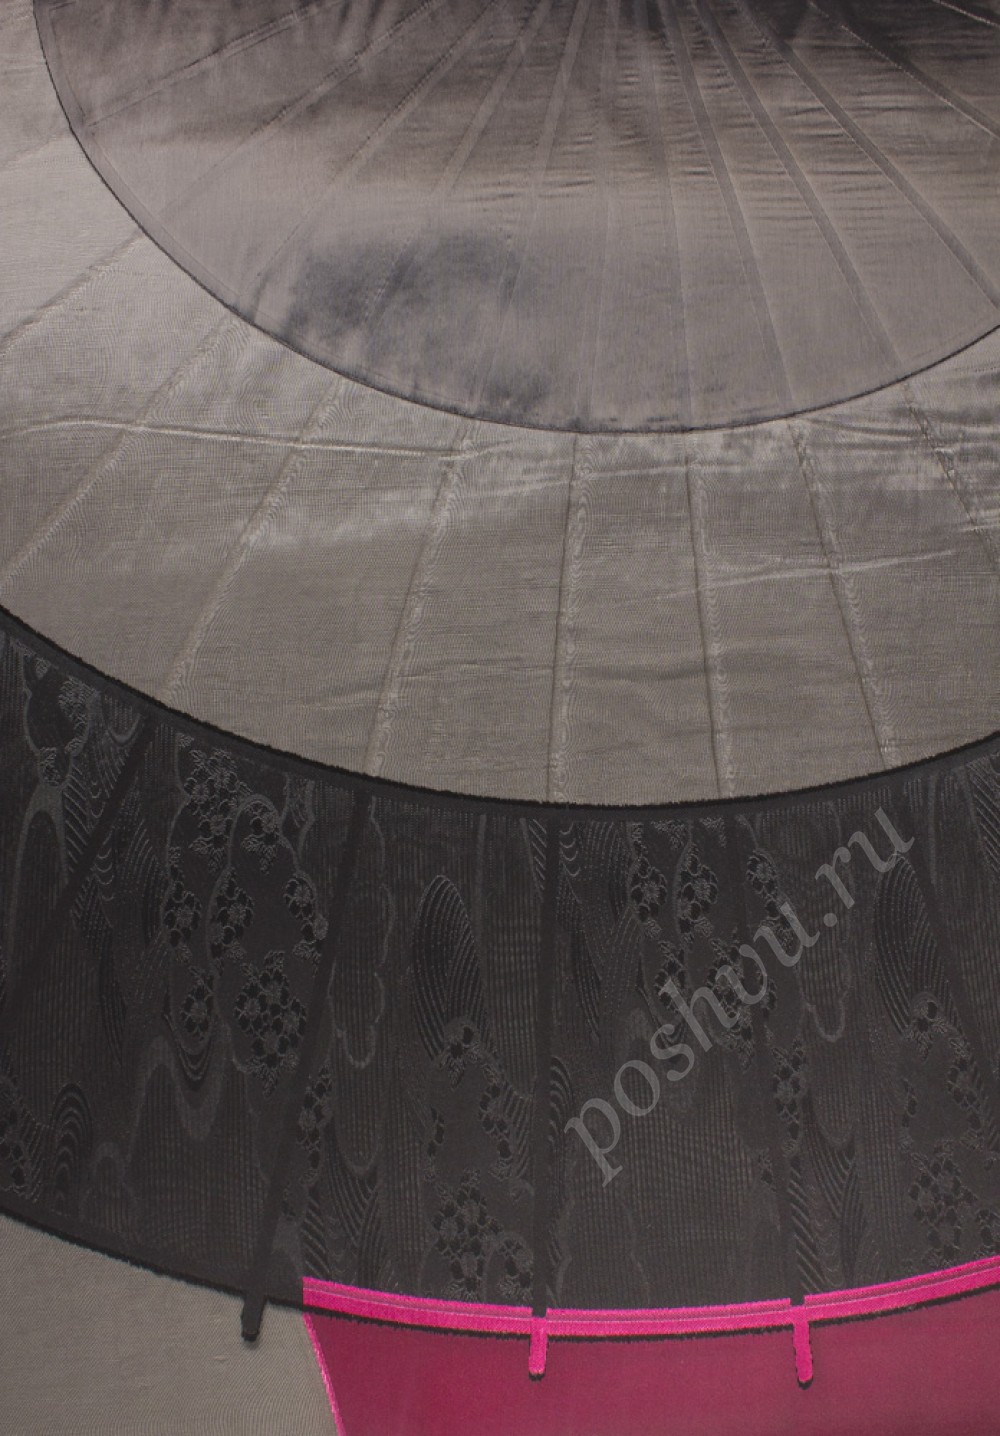 Шелк-органза Armani (крой юбки) Couture, цвет - черный и фуксия (купон)